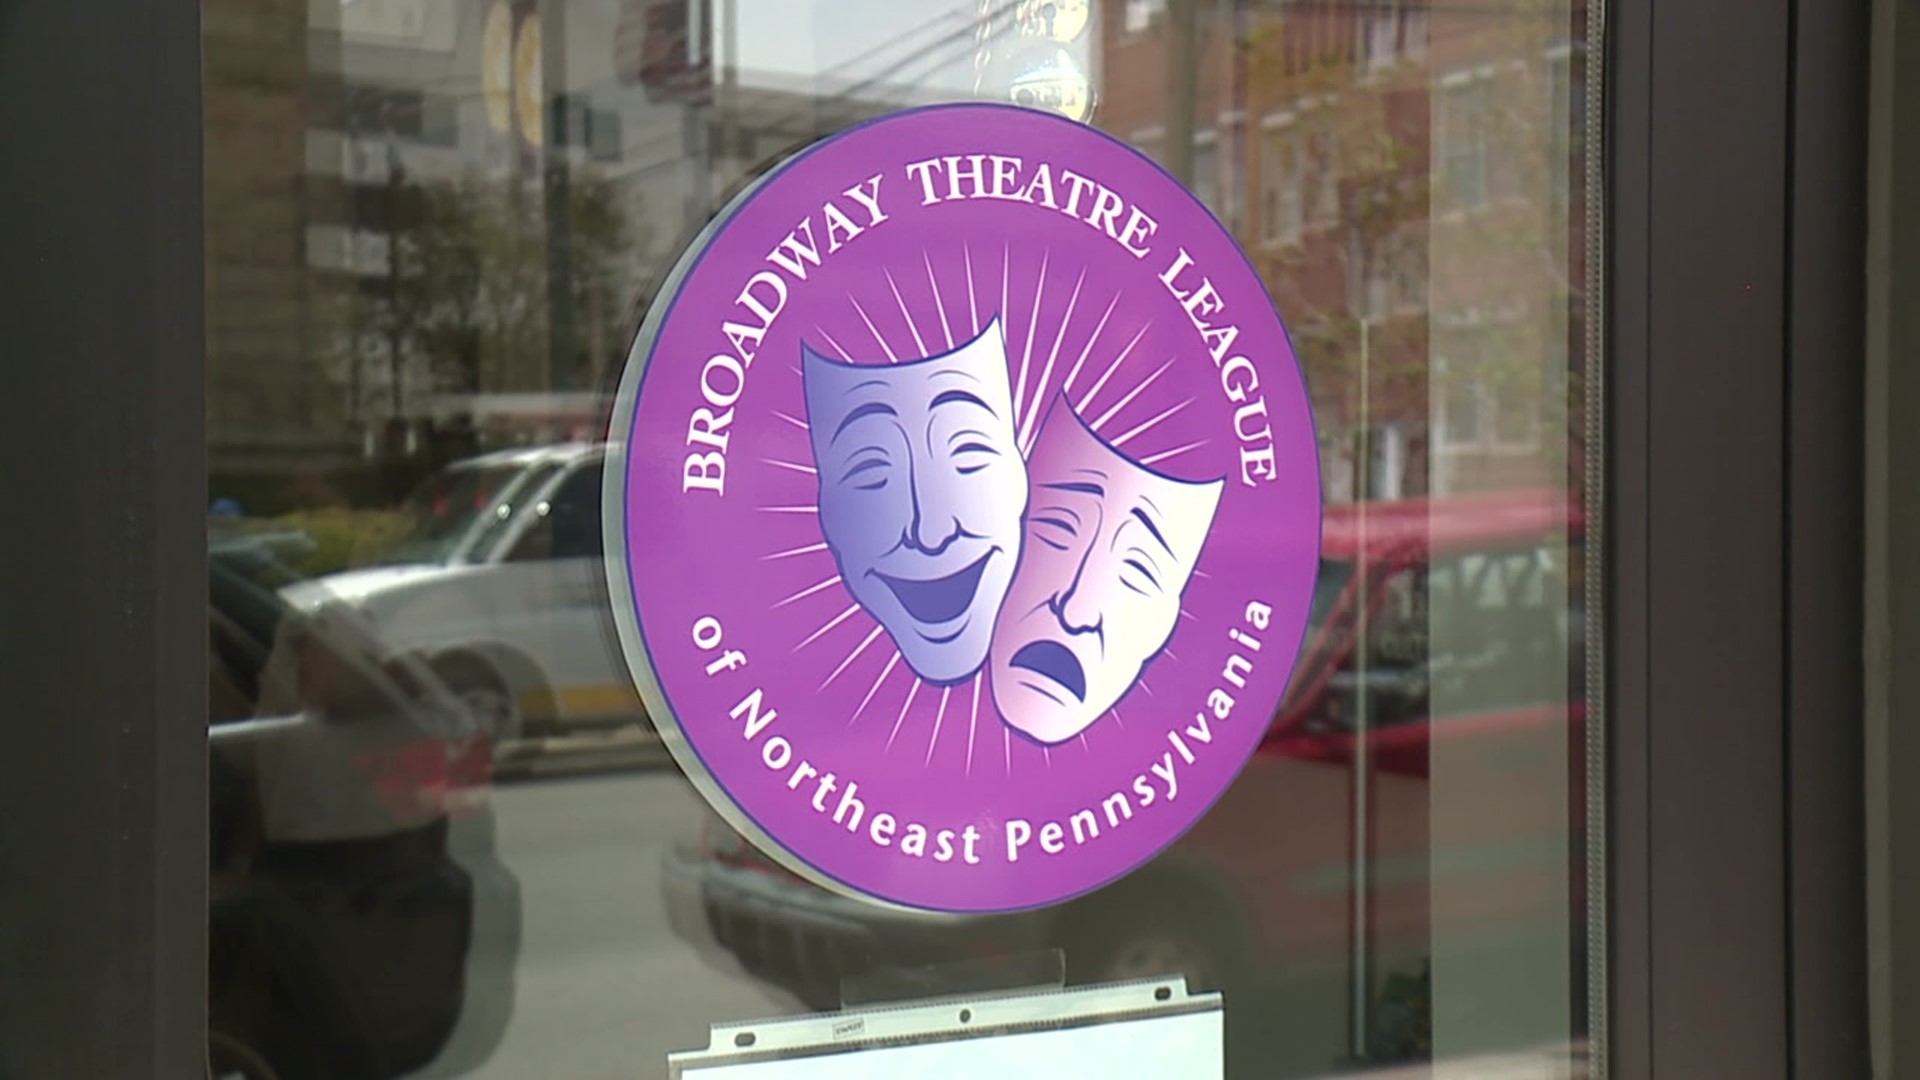 Broadway Theatre League announced its 2021 season at the Scranton Cultural Center.